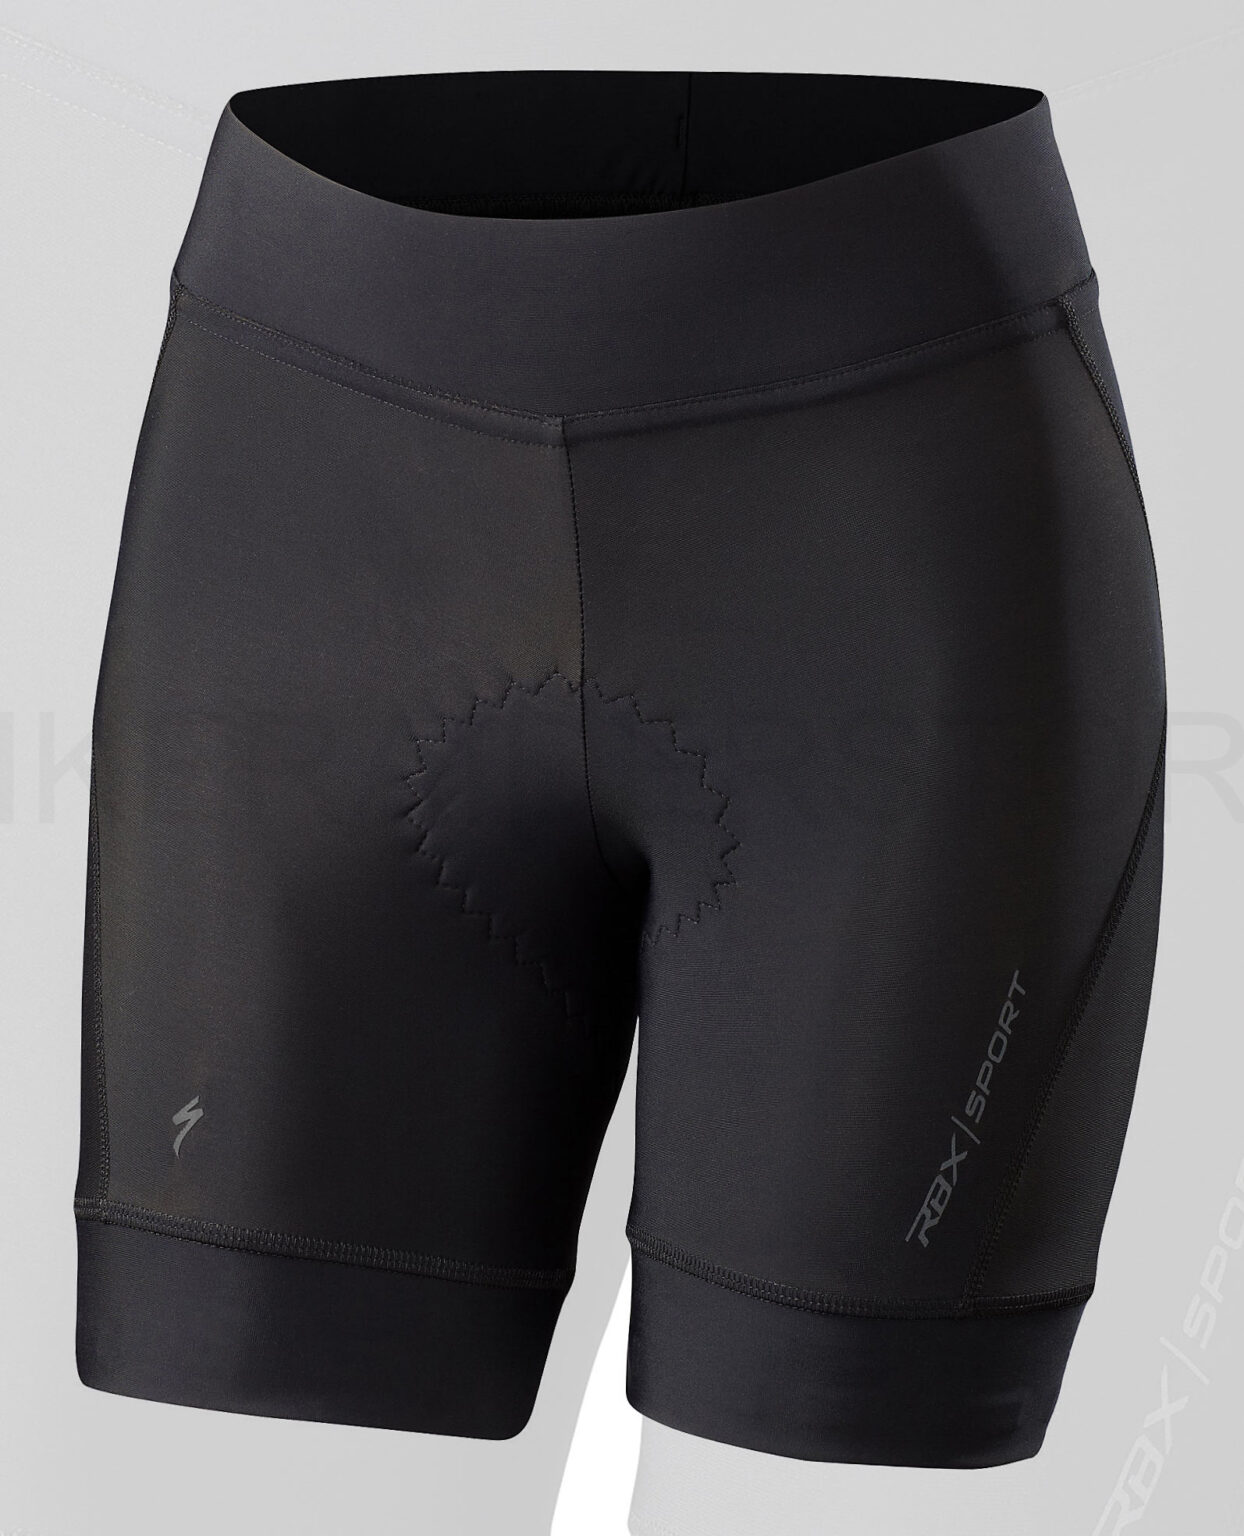 Specialized Women’s RBX Sport Shorty Cycling Shorts Black – Medium ...